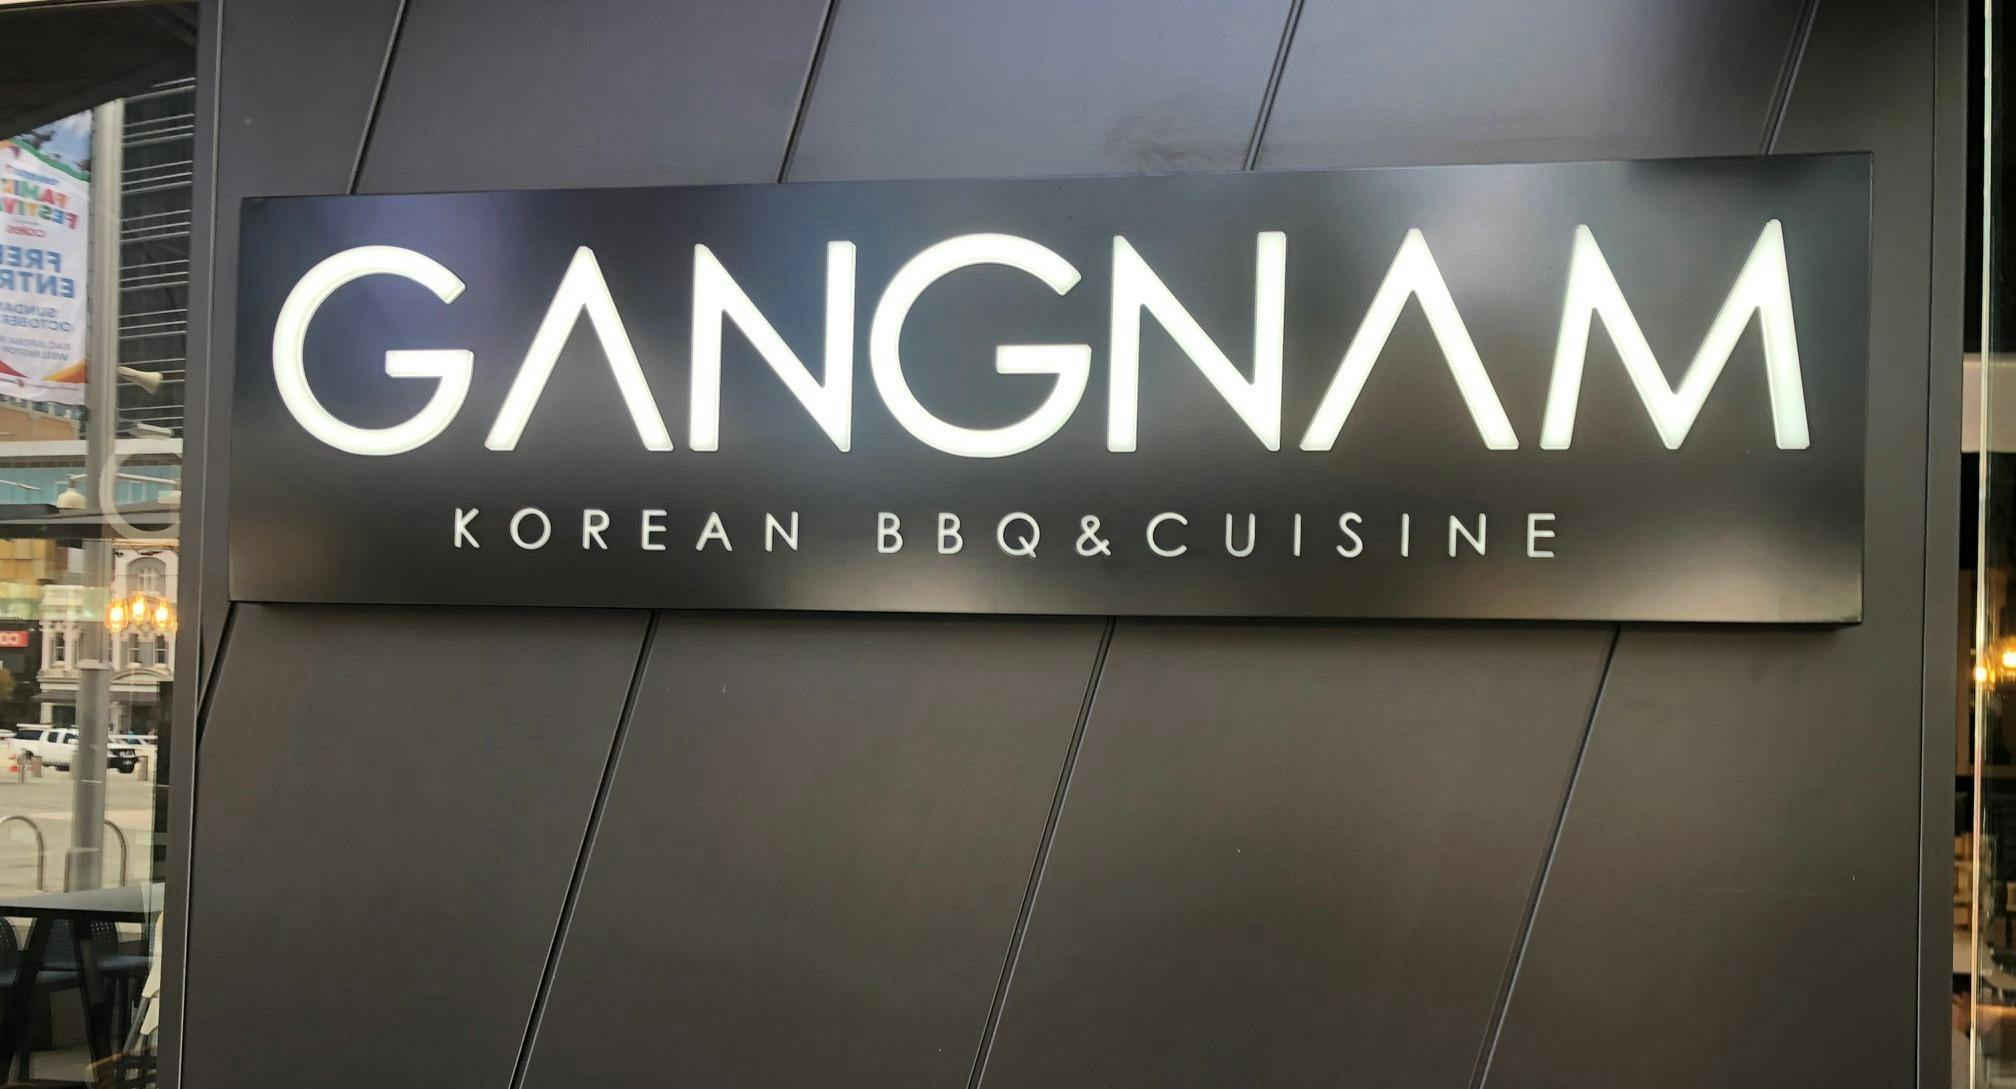 Photo of restaurant Gangnam at Yagan Square in Perth CBD, Perth